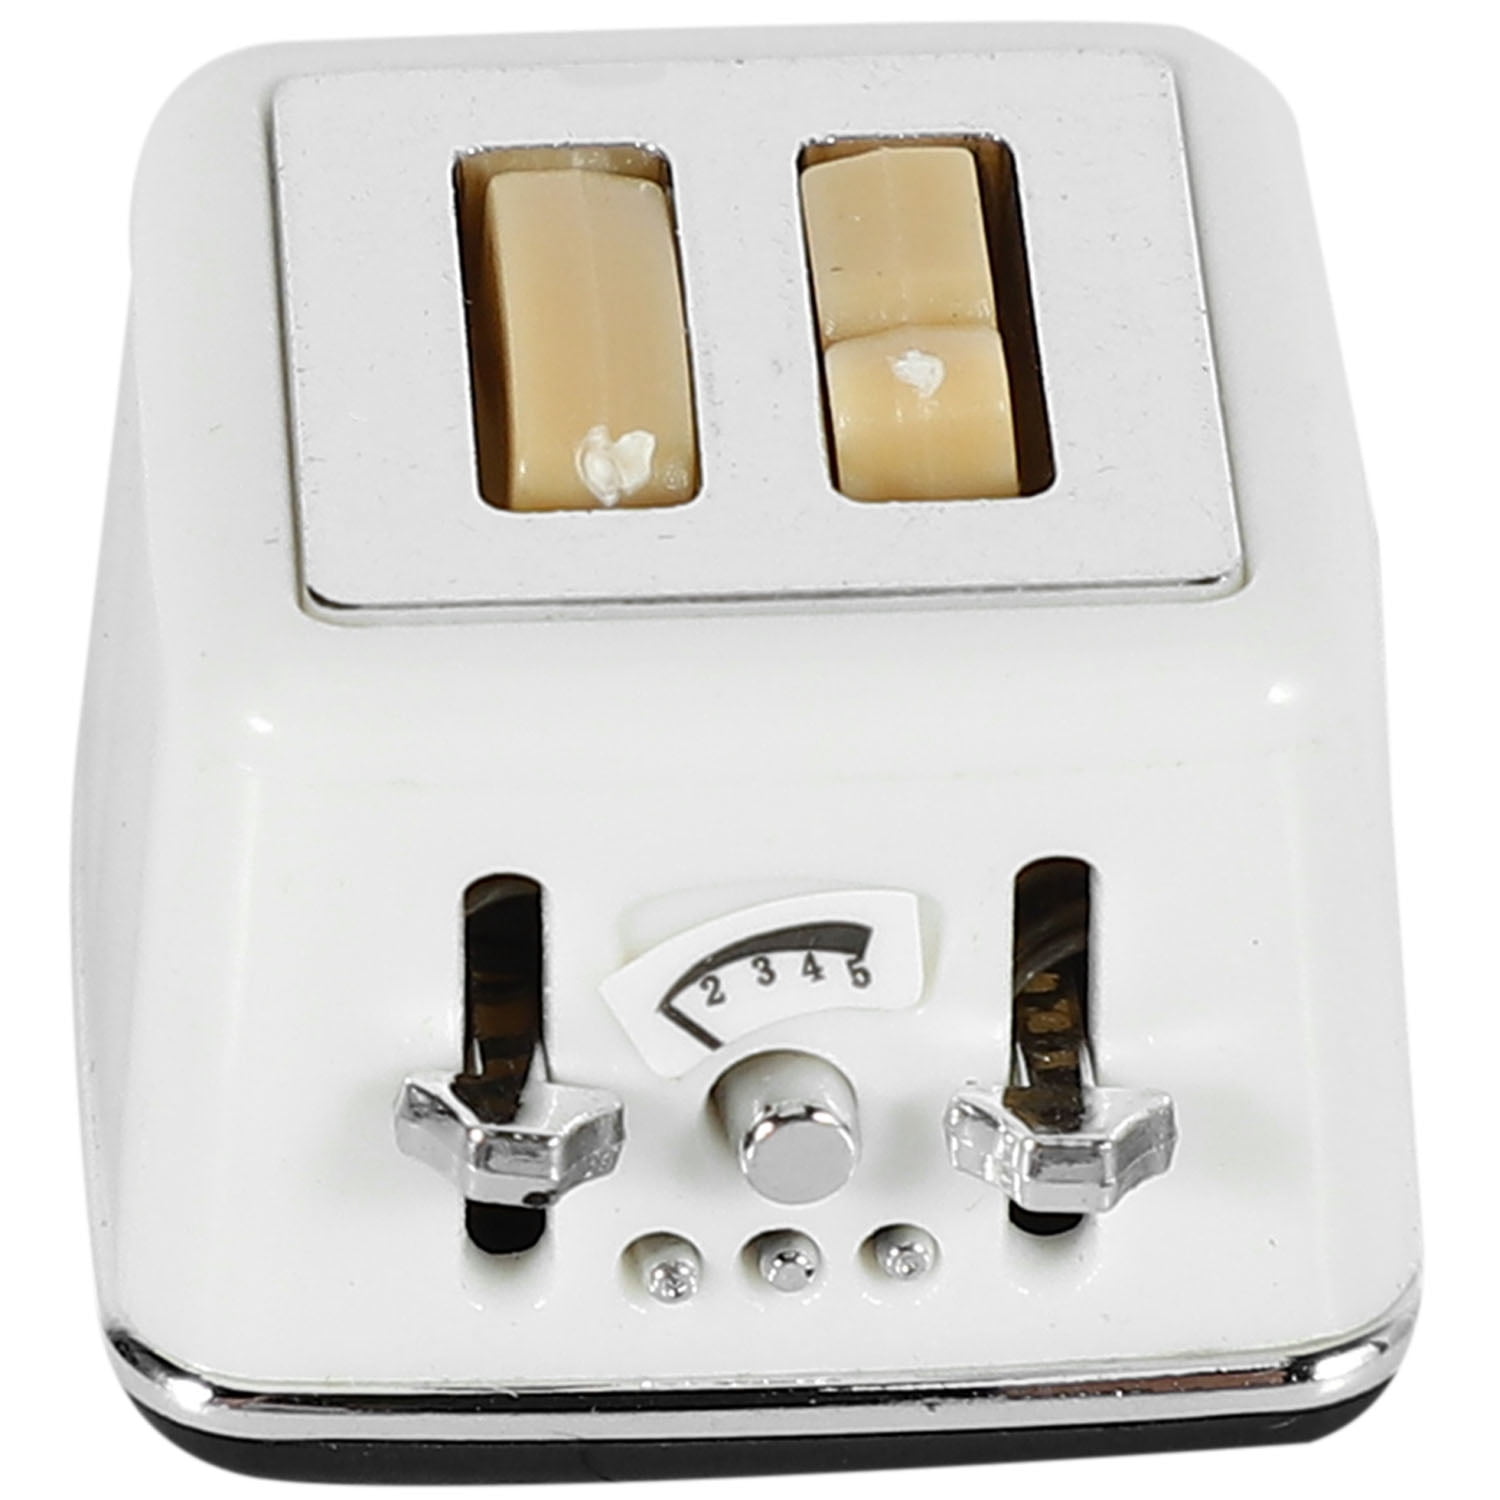 1/12Scale dollhouse bread machine with toast miniature cutedecorations toasterPB 